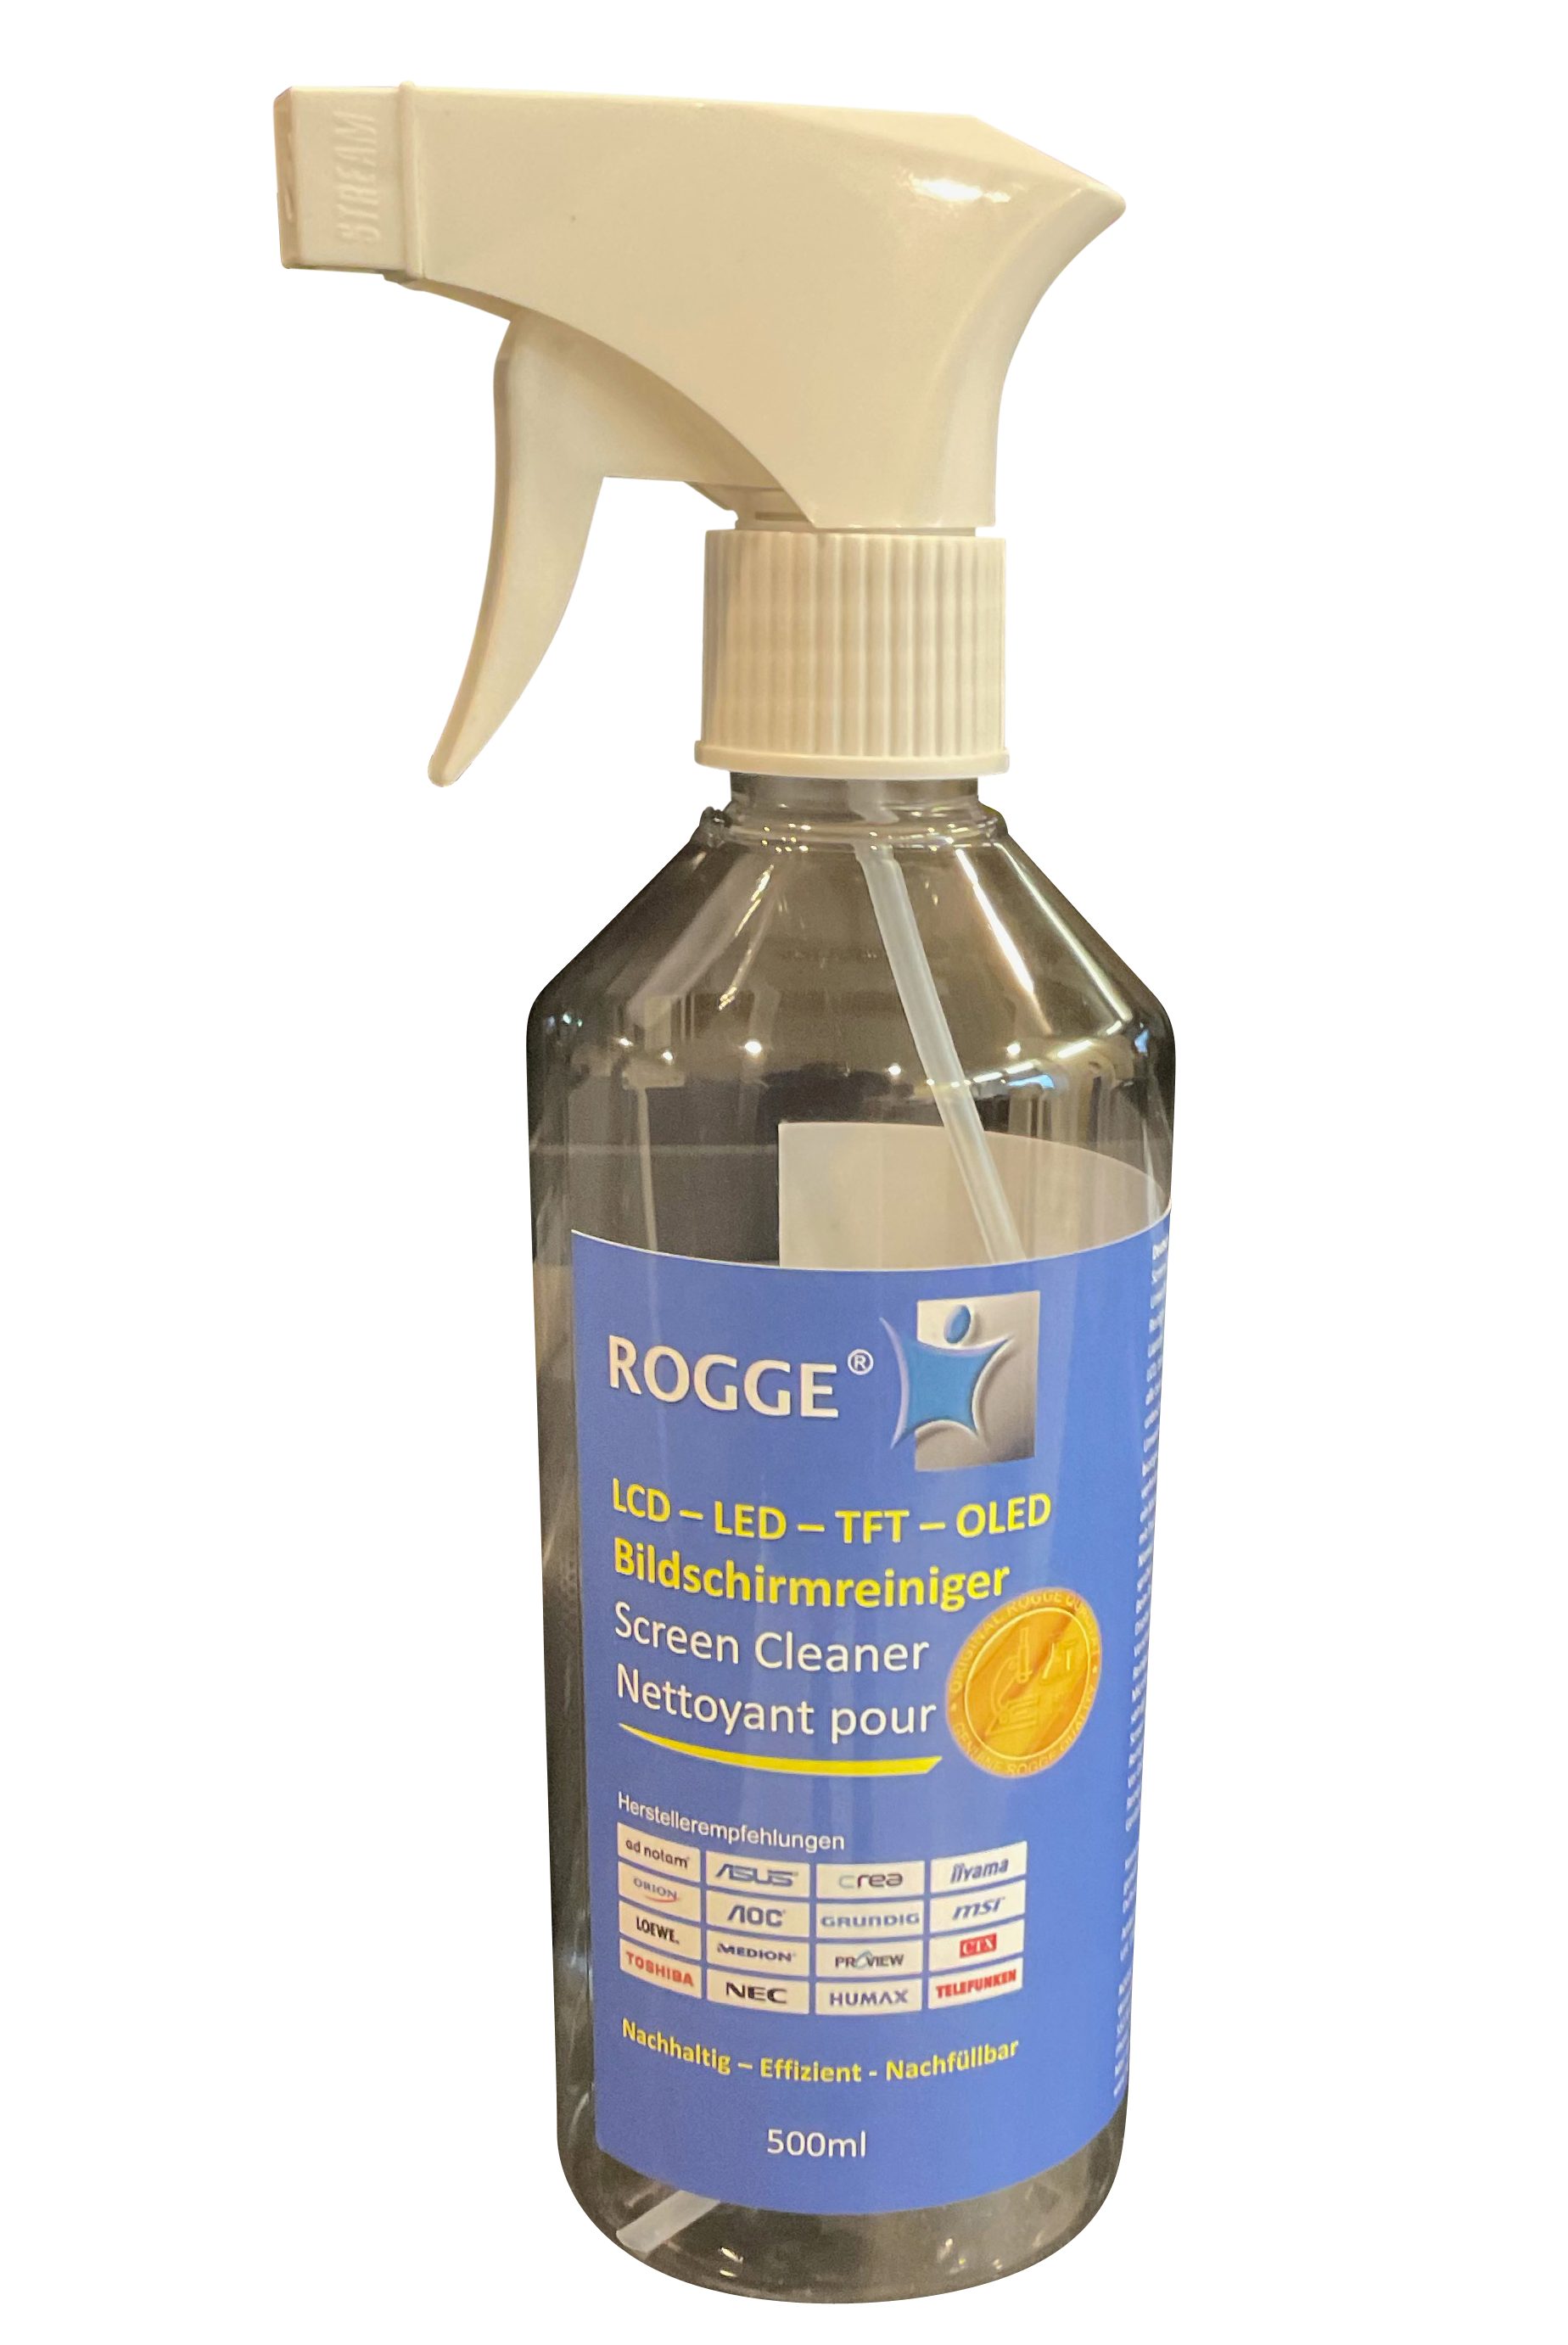 Rogge Reinigungs-Set ROGGE 500ml Microfasertuch, Bildschirmreiniger (1-St) inkl